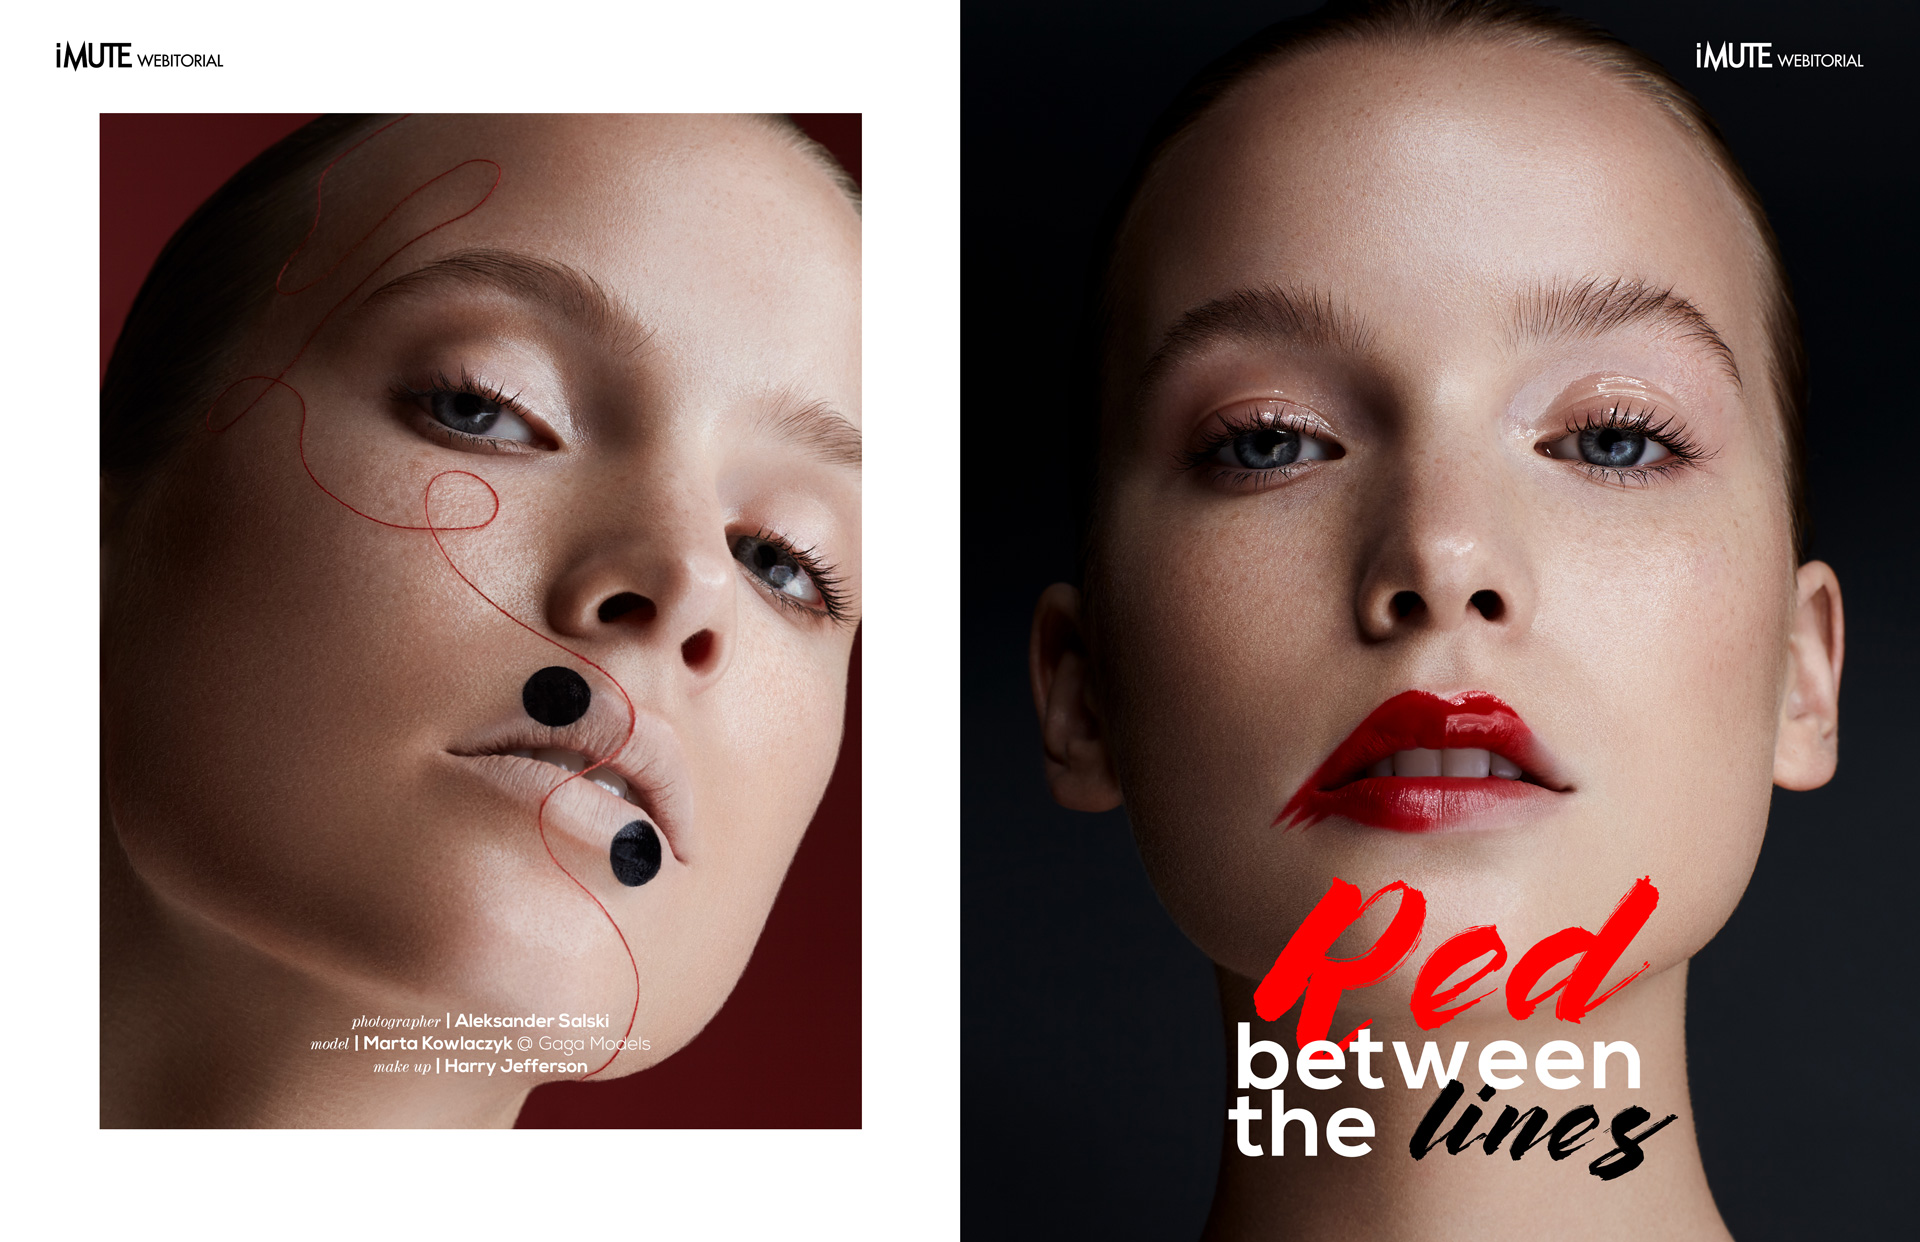 Red between the lines webitorial for iMute Magazine Photographer | Aleksander Salski Model | Marta Kowlaczyk @ Gaga Models Make up | Harry Jefferson